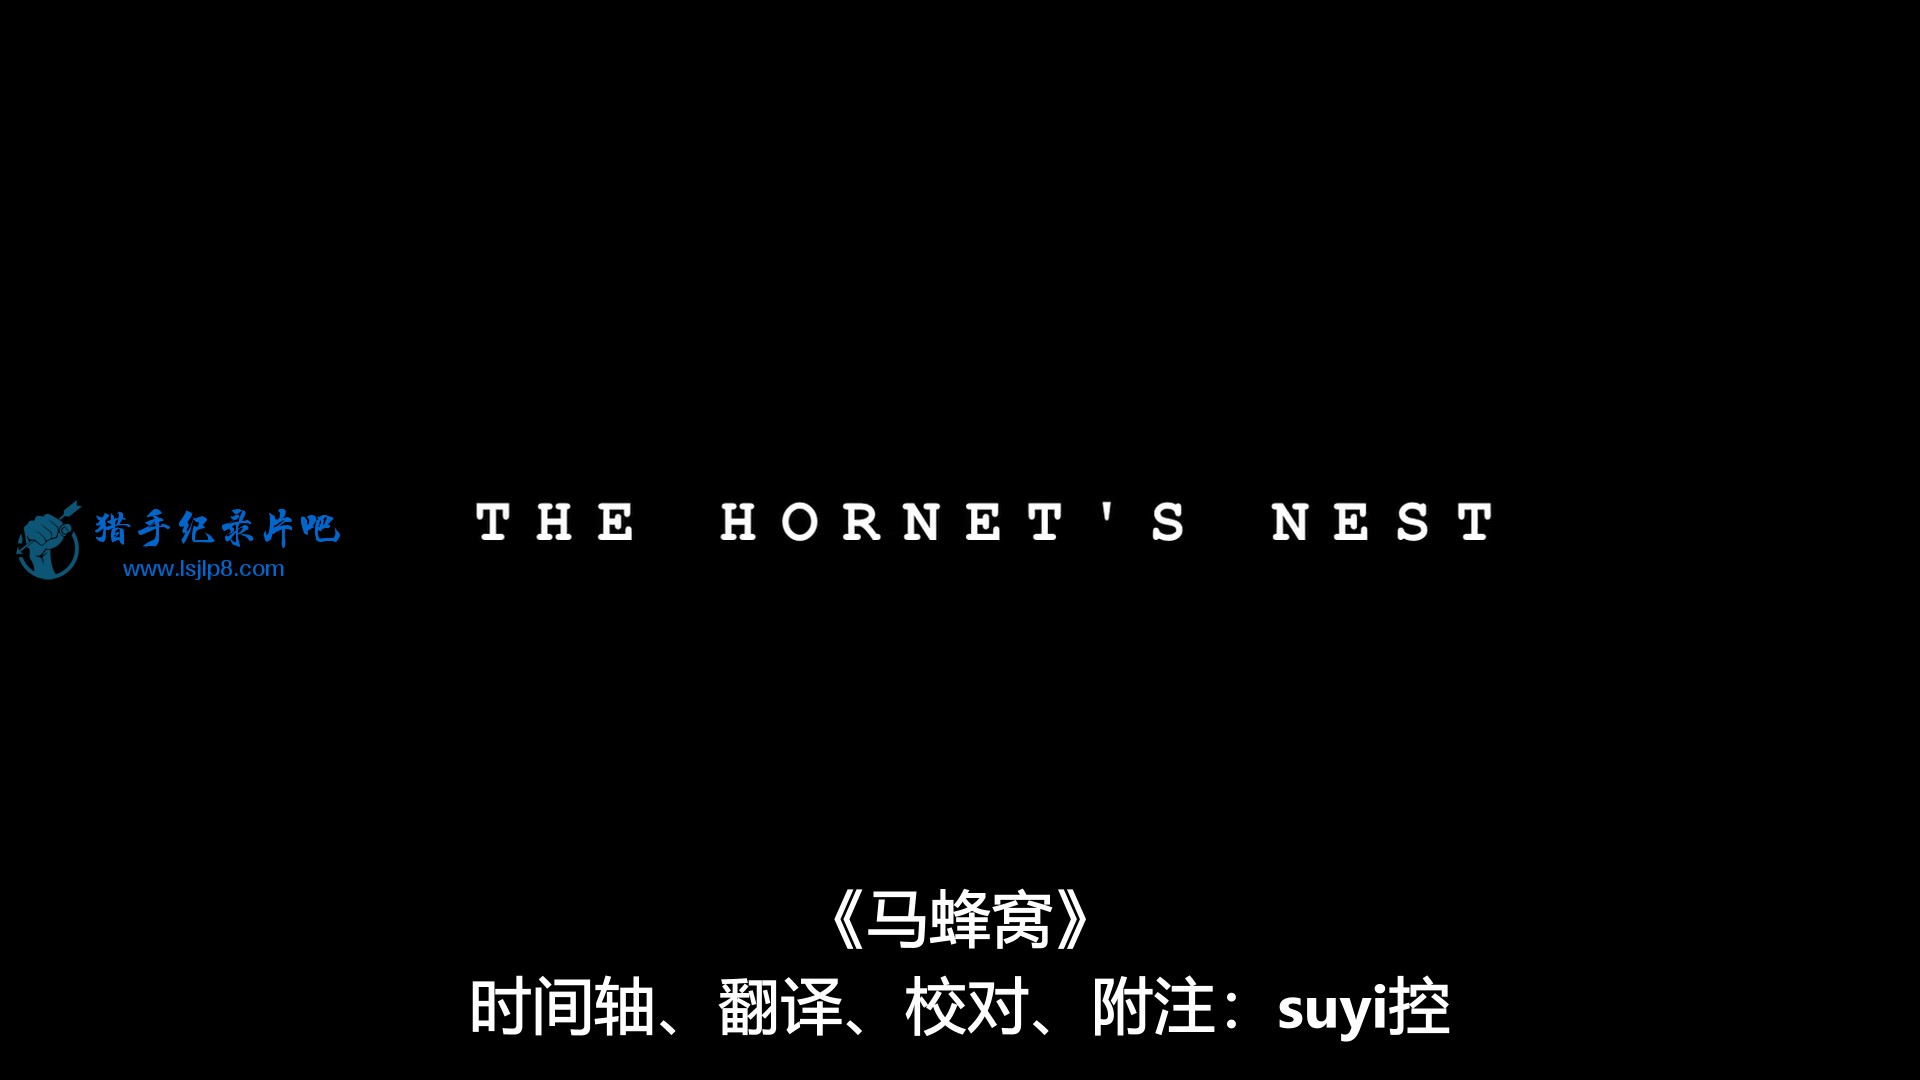 the.hornets.nest.2014.limited.1080p.bluray.x264-topcat.mkv_20211130_193816.519.jpg